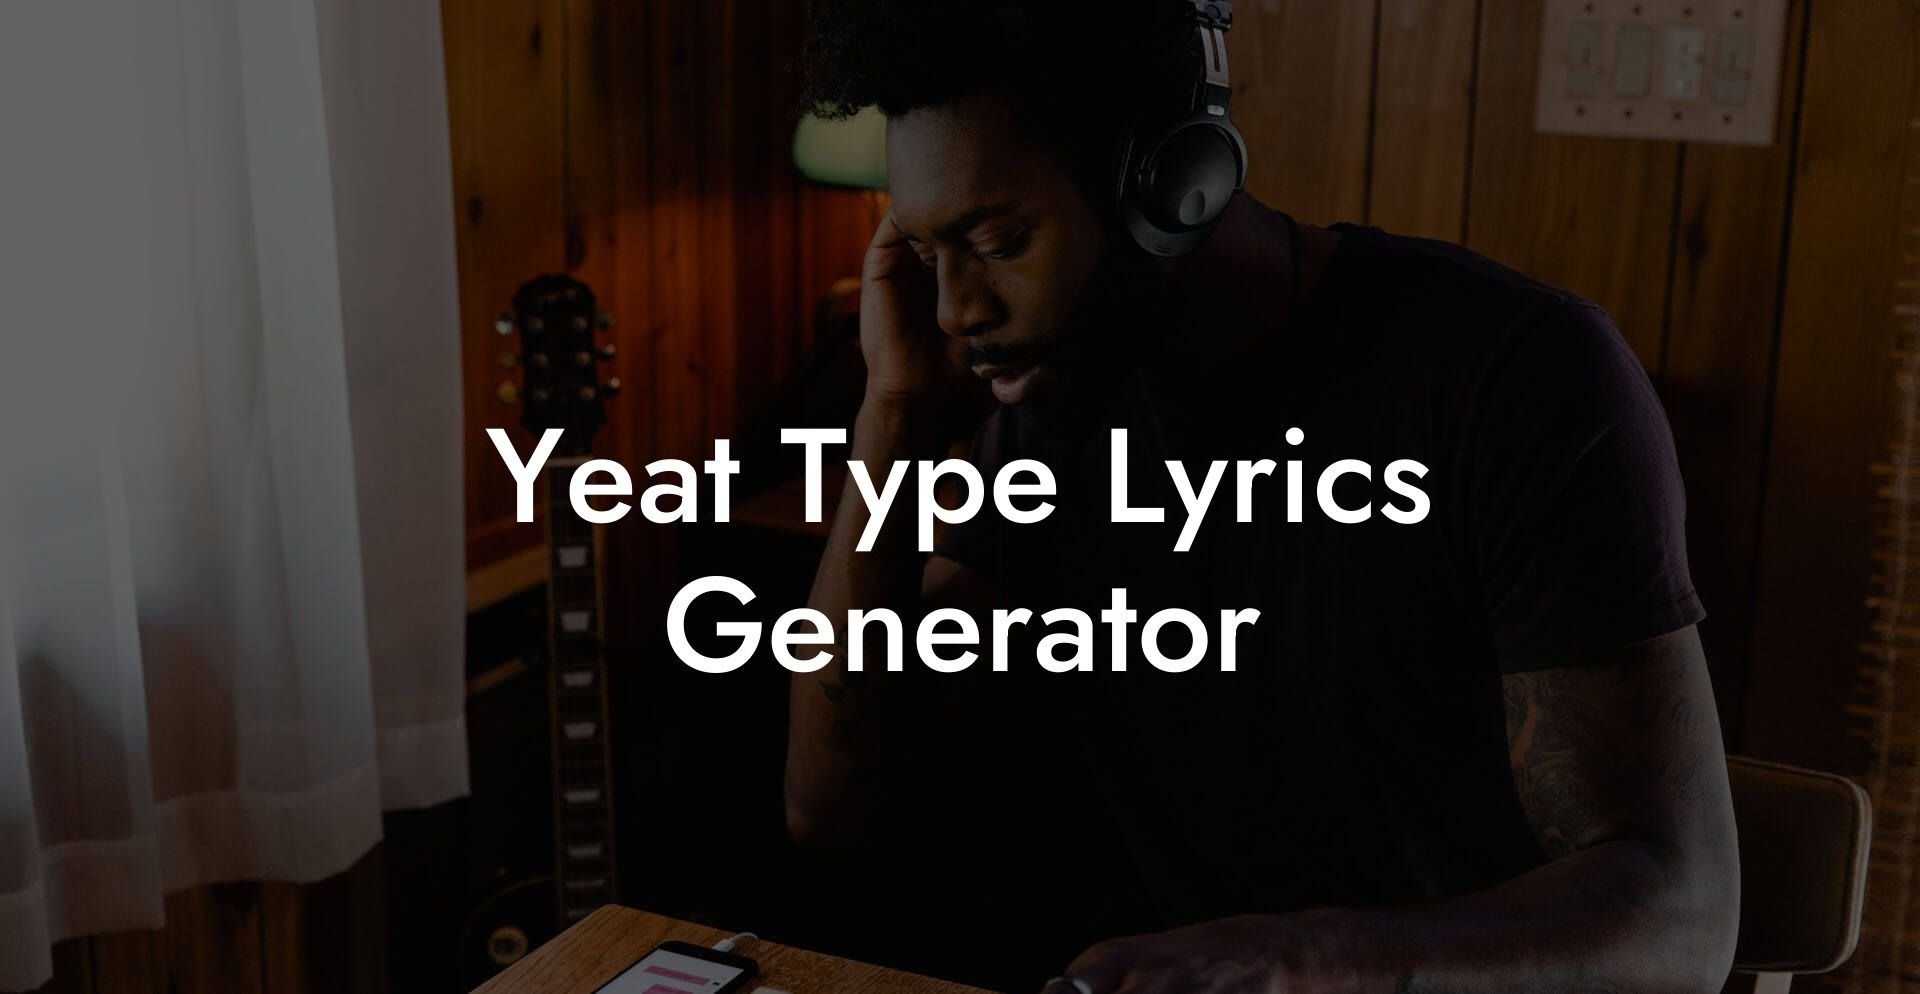 yeat type lyrics generator lyric assistant